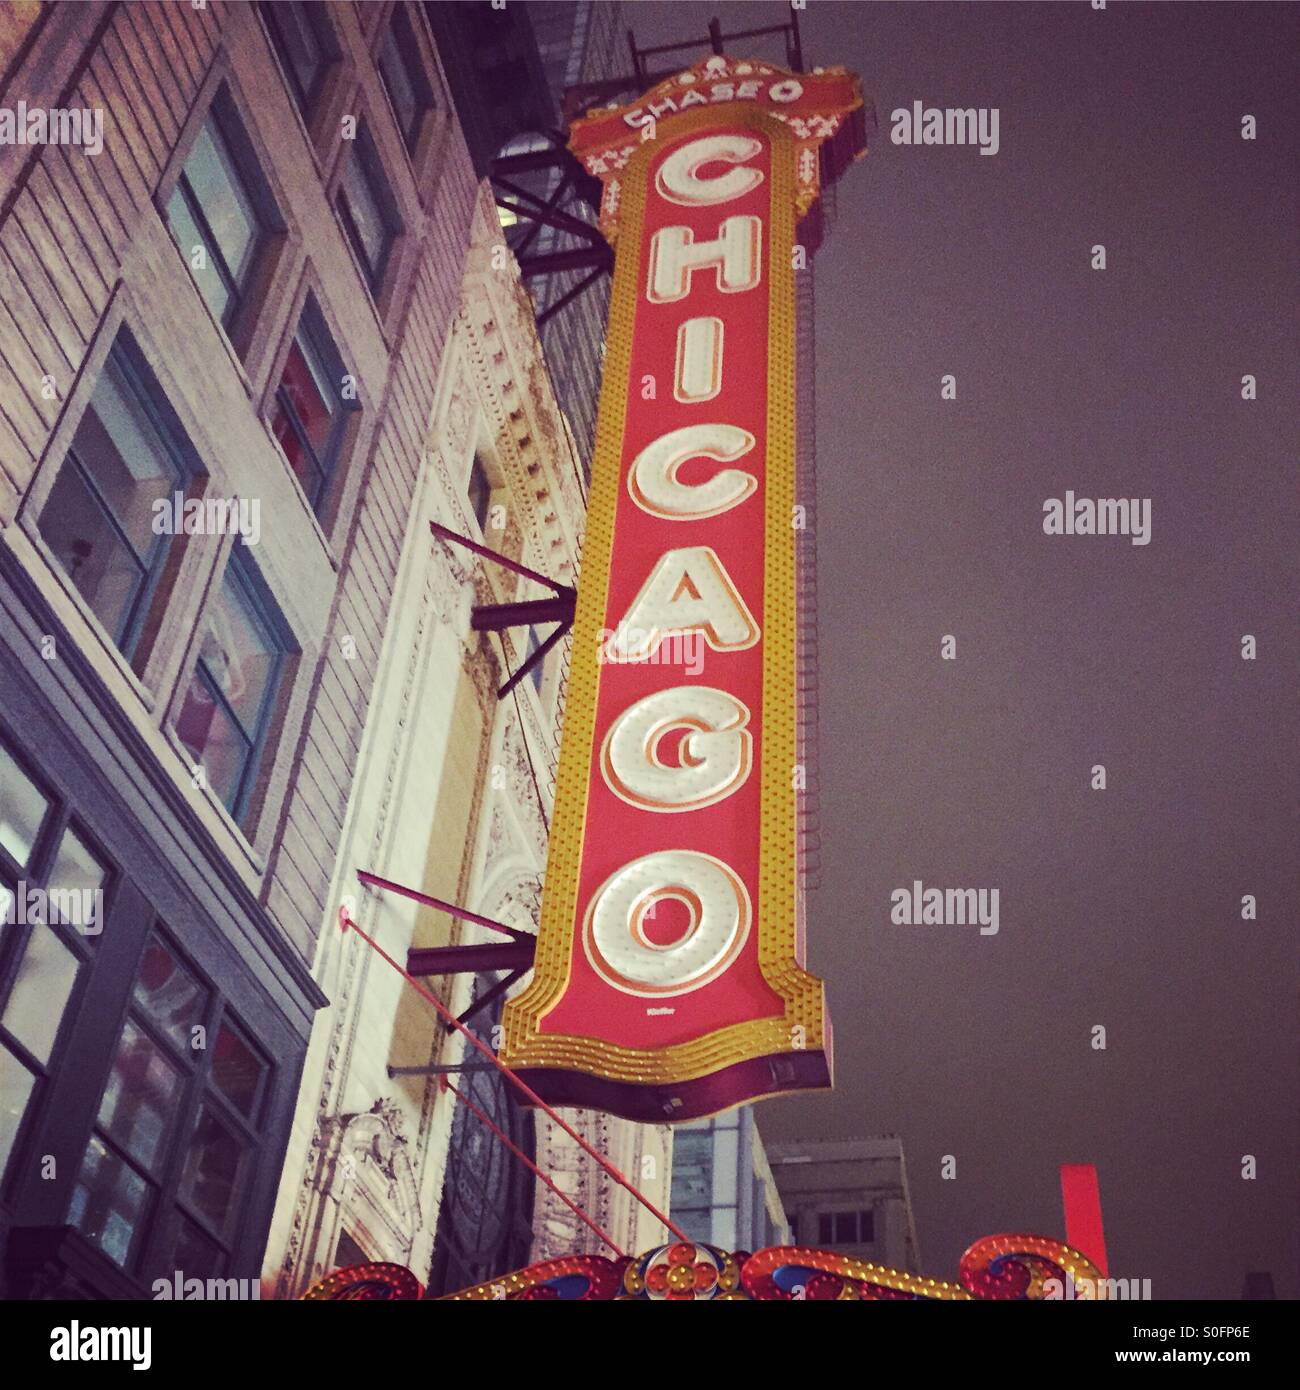 Chicago Theatre marquee Stock Photo